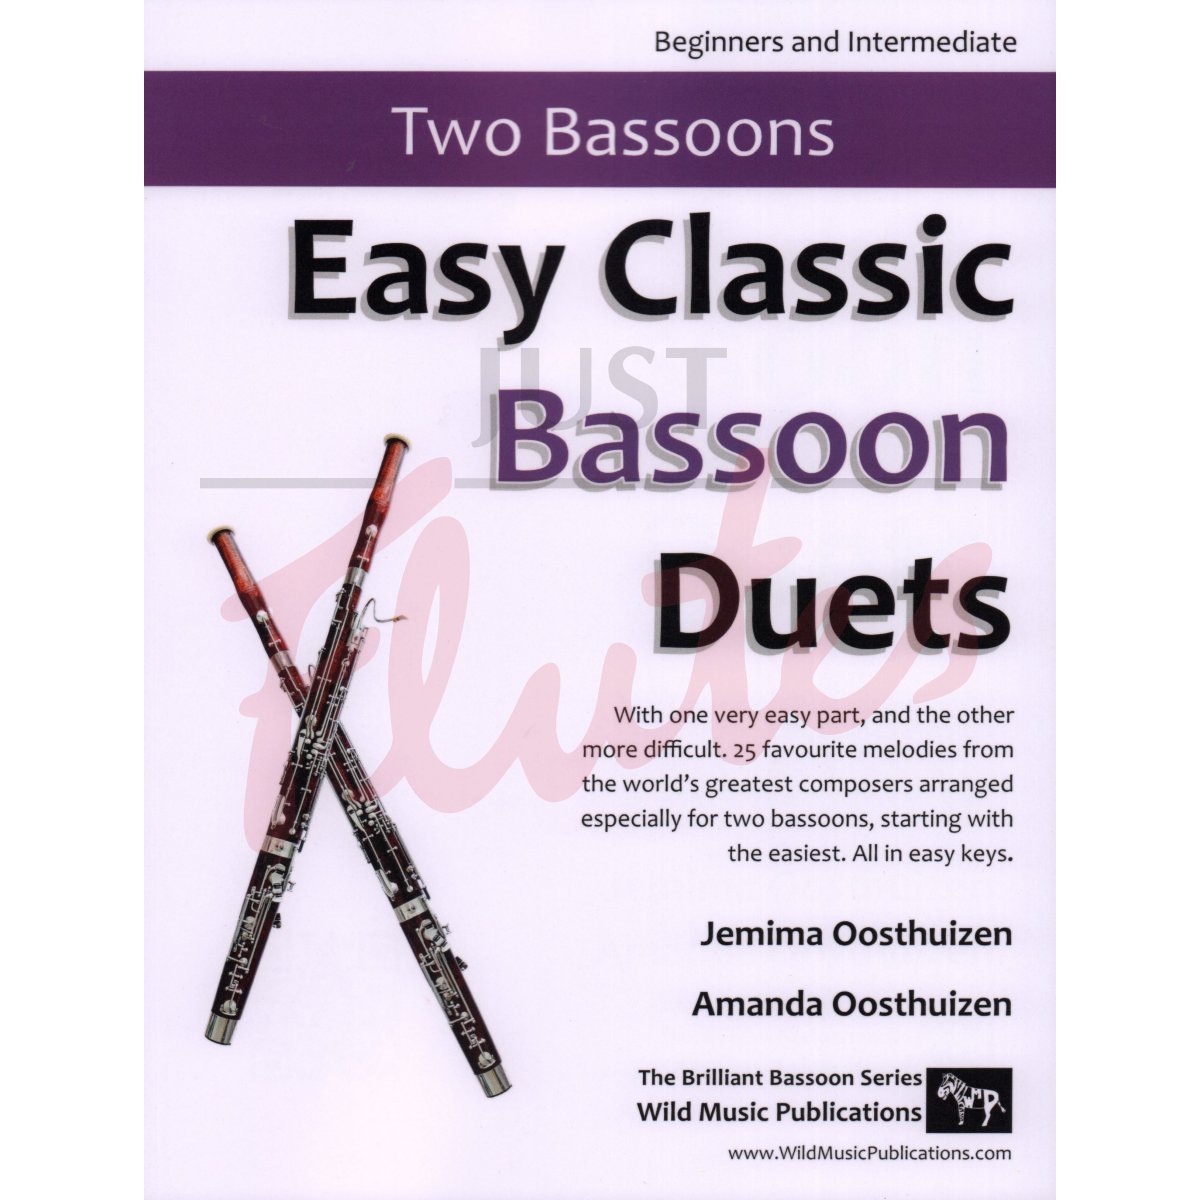 Easy Classic Bassoon Duets